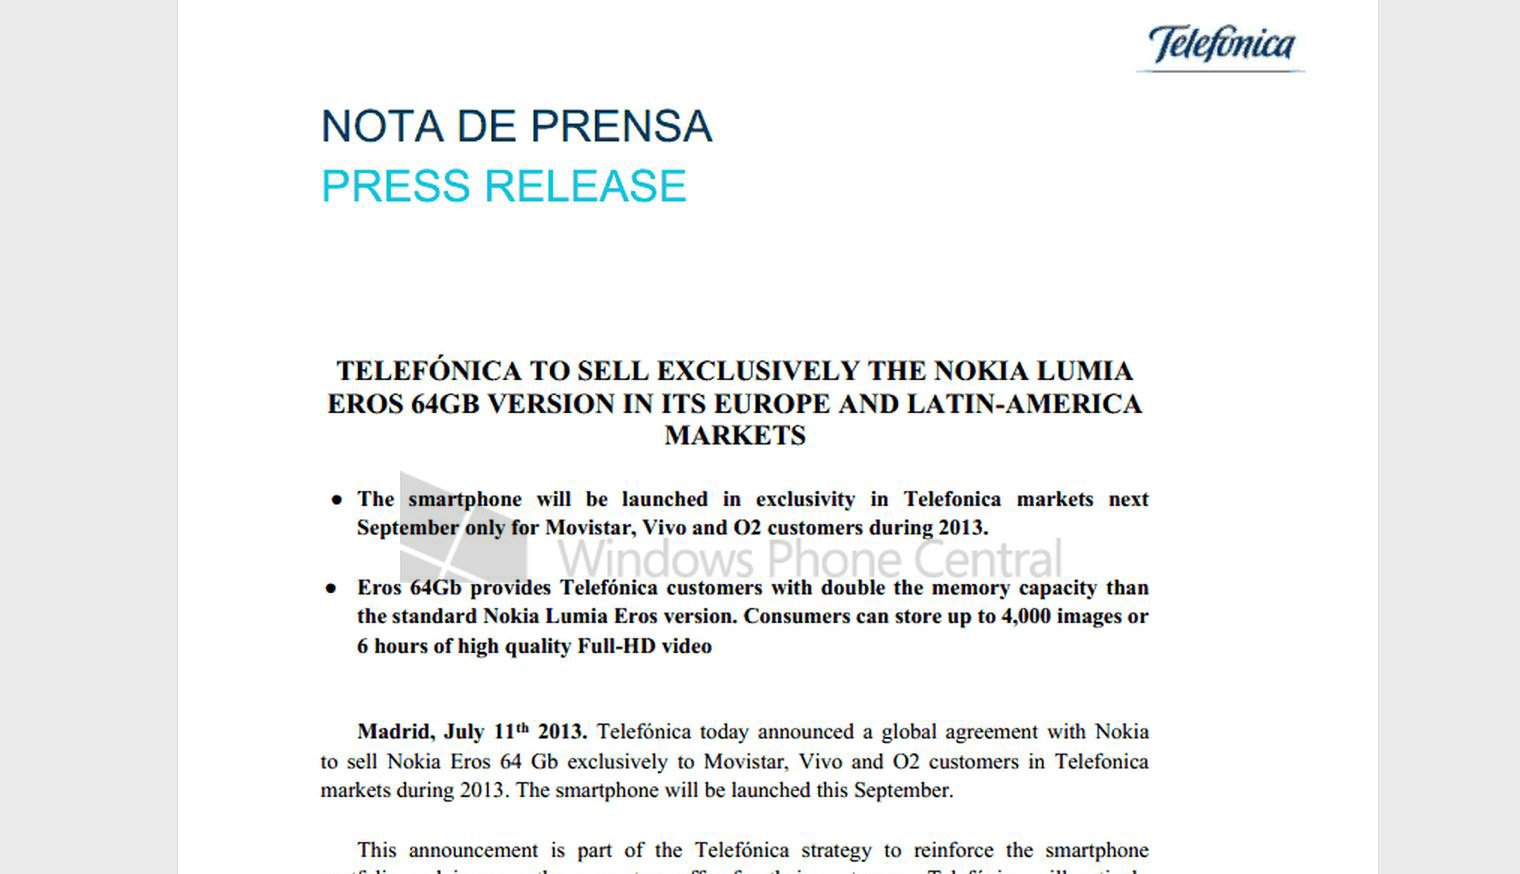 Telefonica Press Release